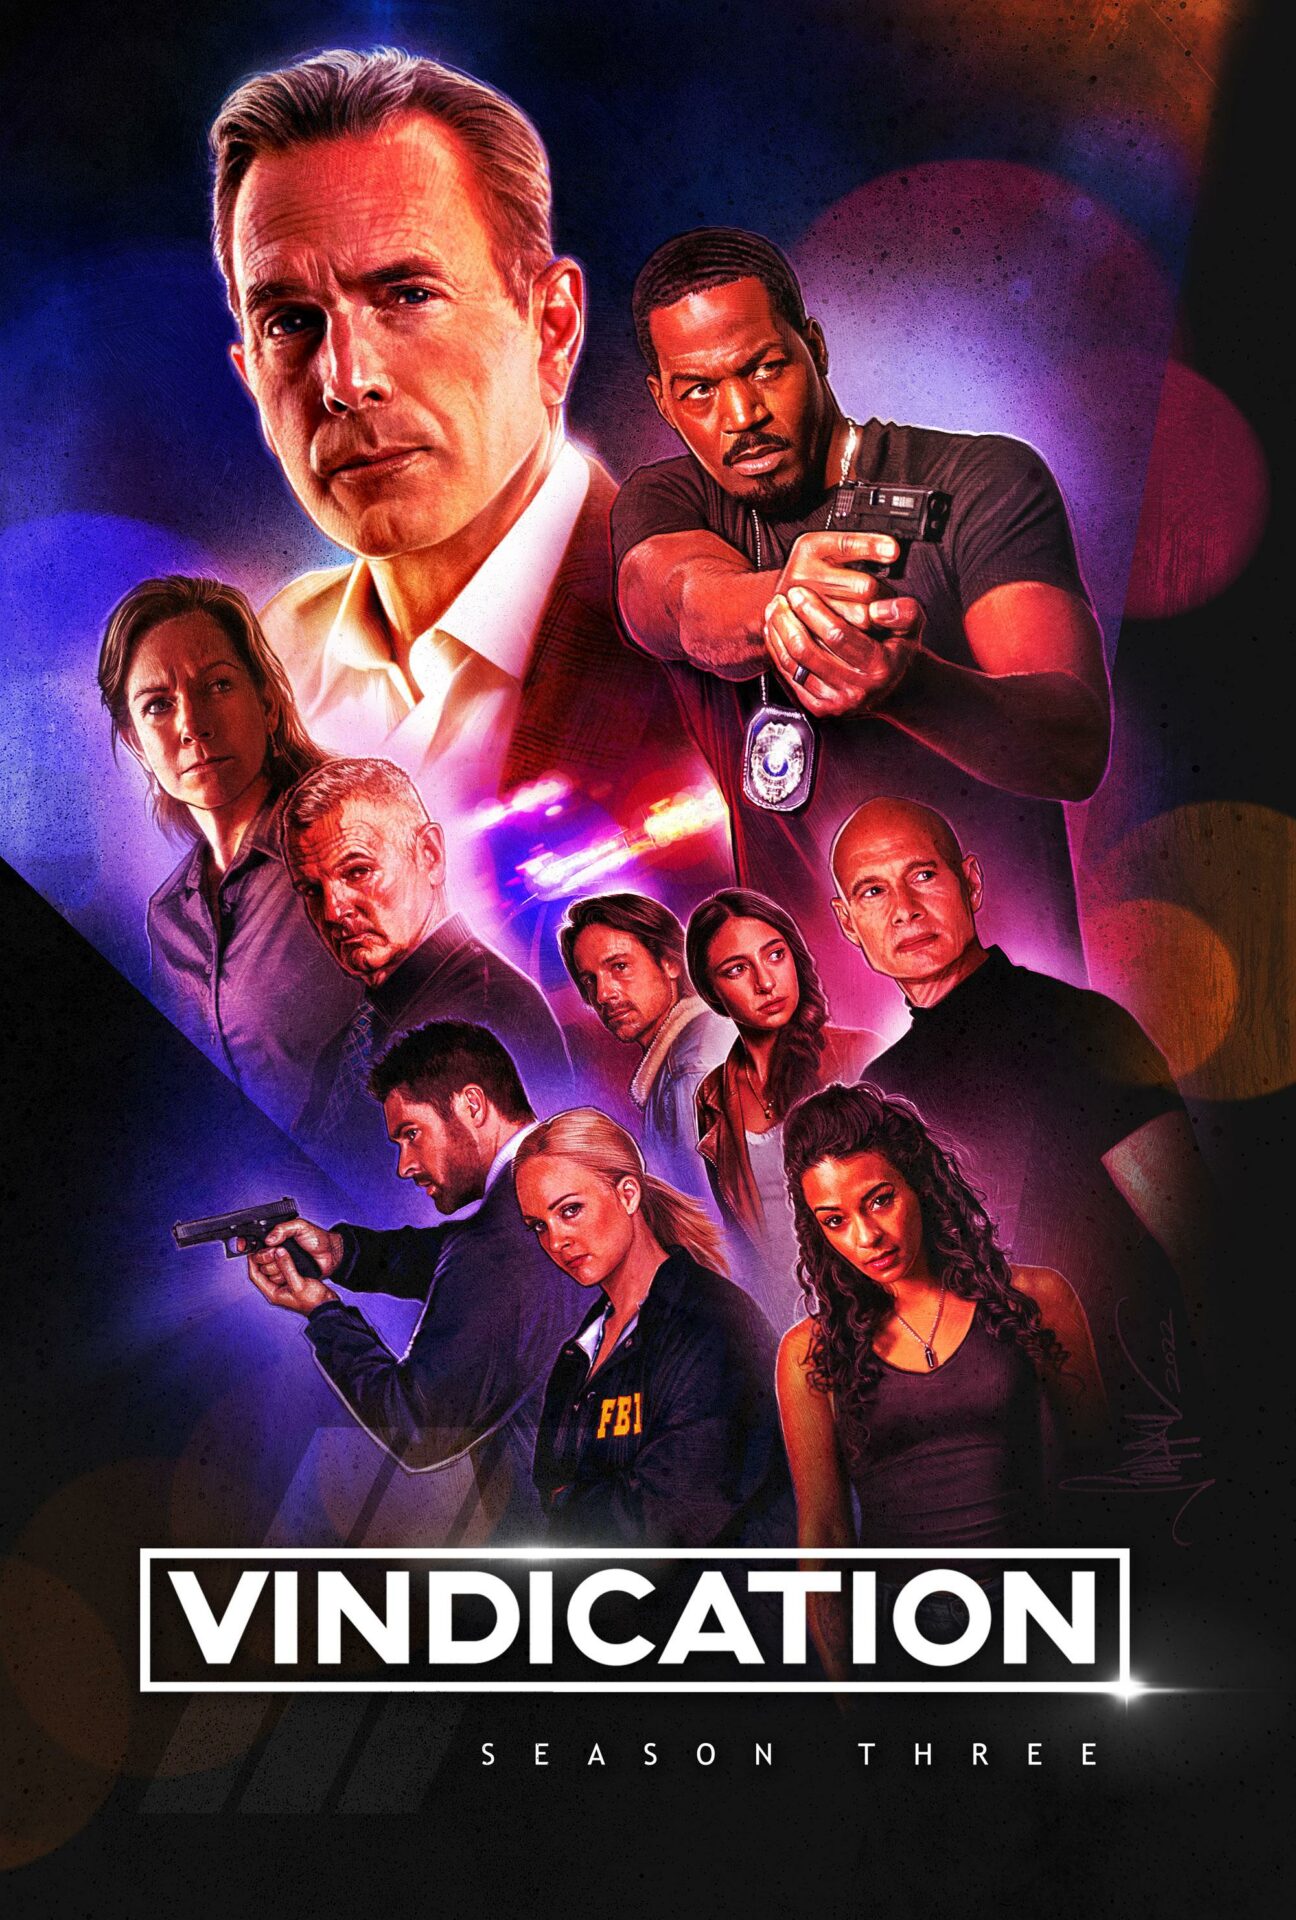 VINDICATION Season 3 Movieguide Movie Reviews for Families